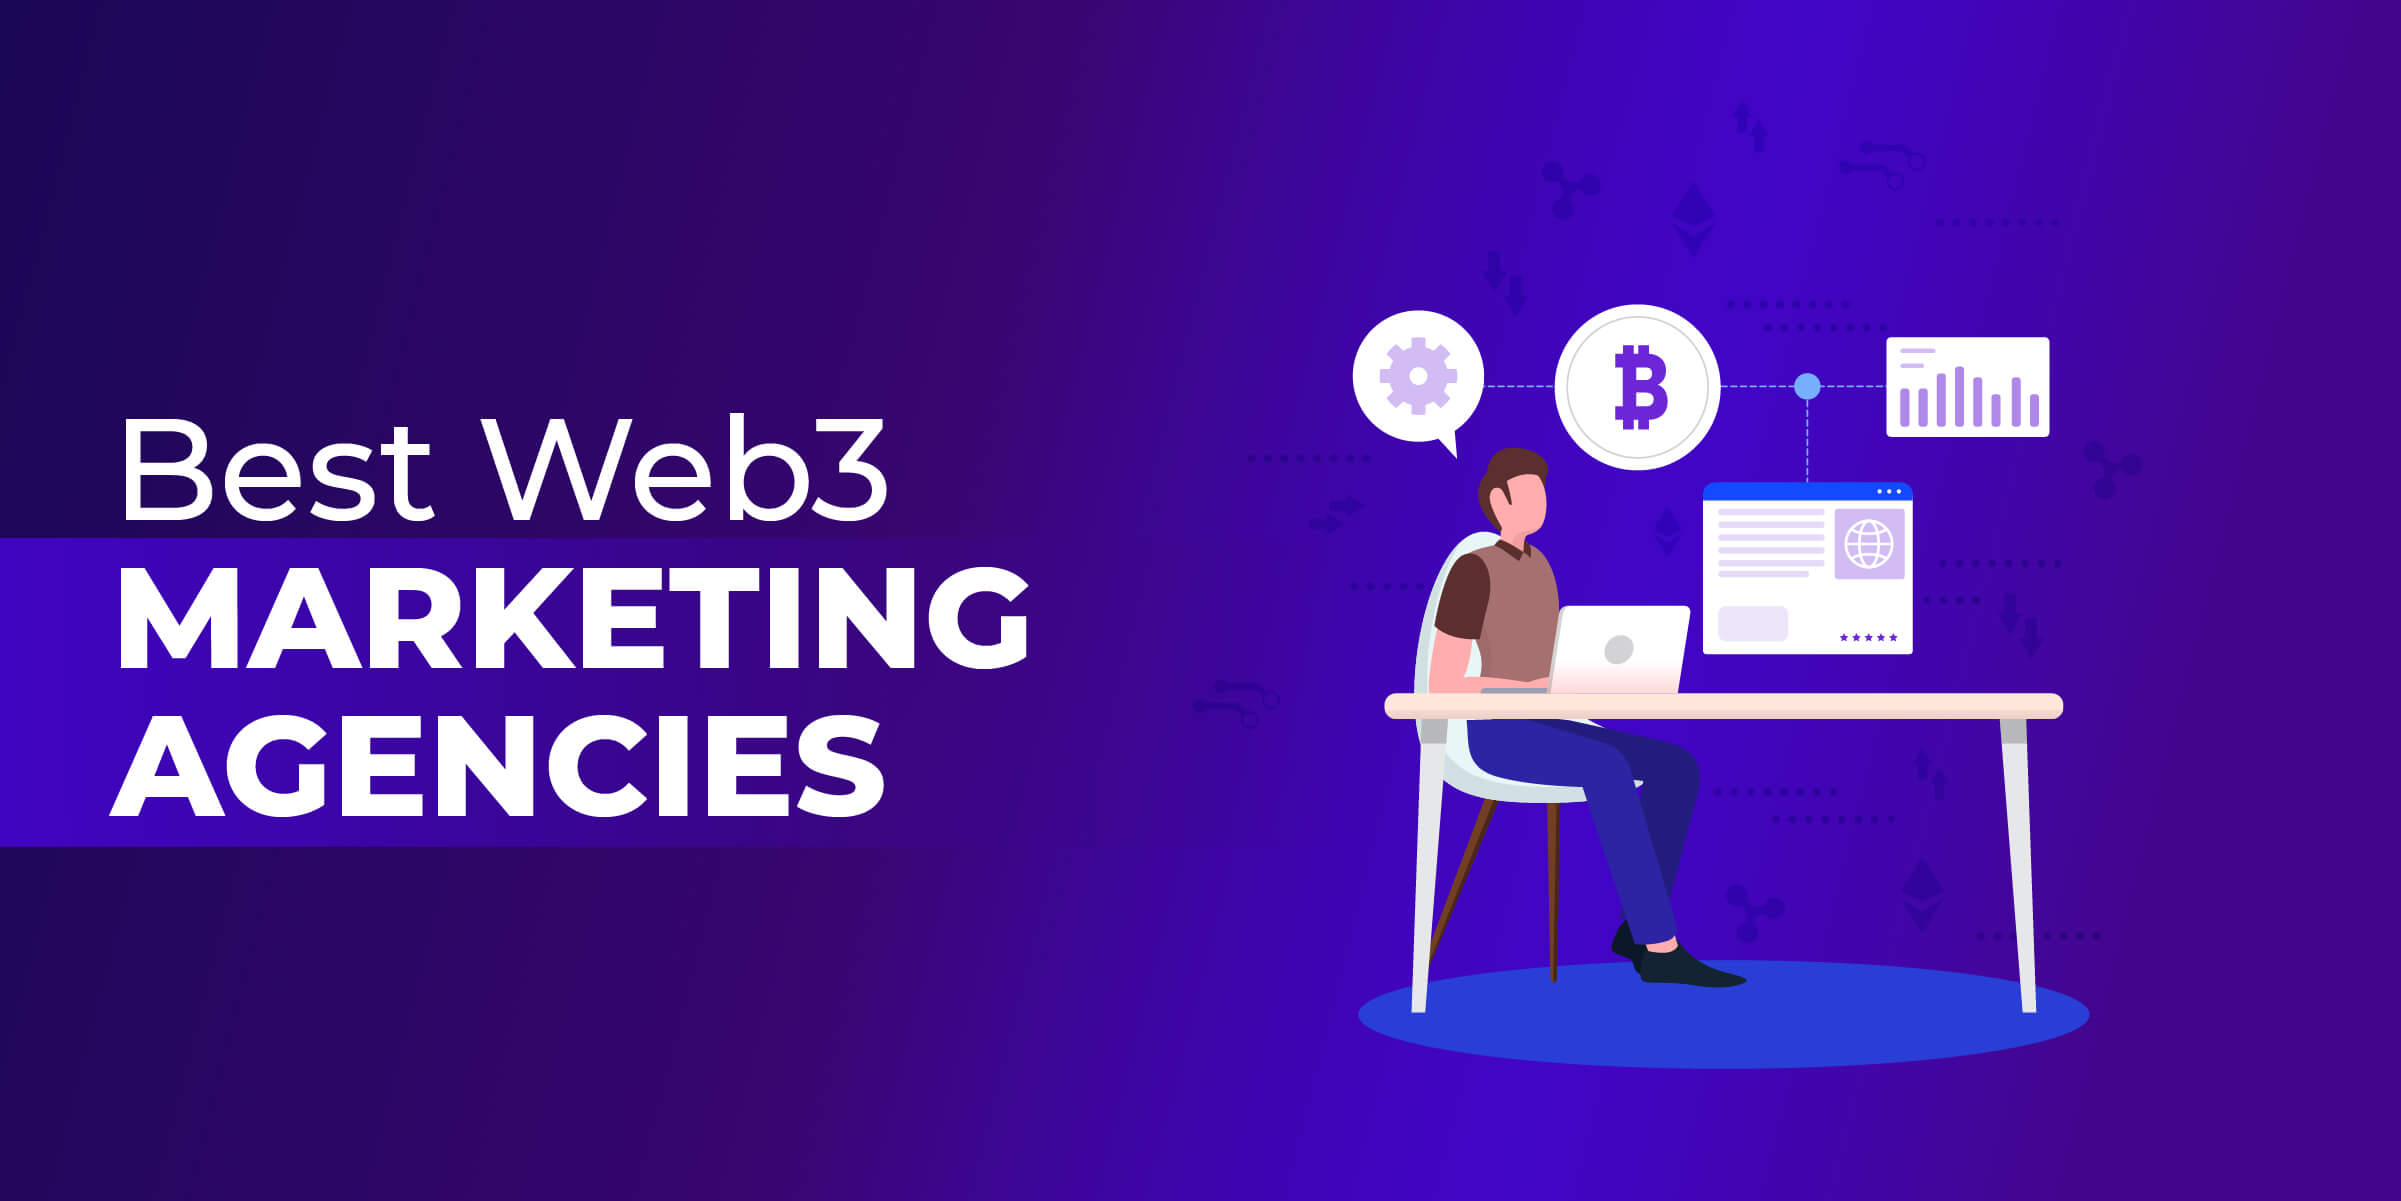 Best Web3 Marketing Agencies